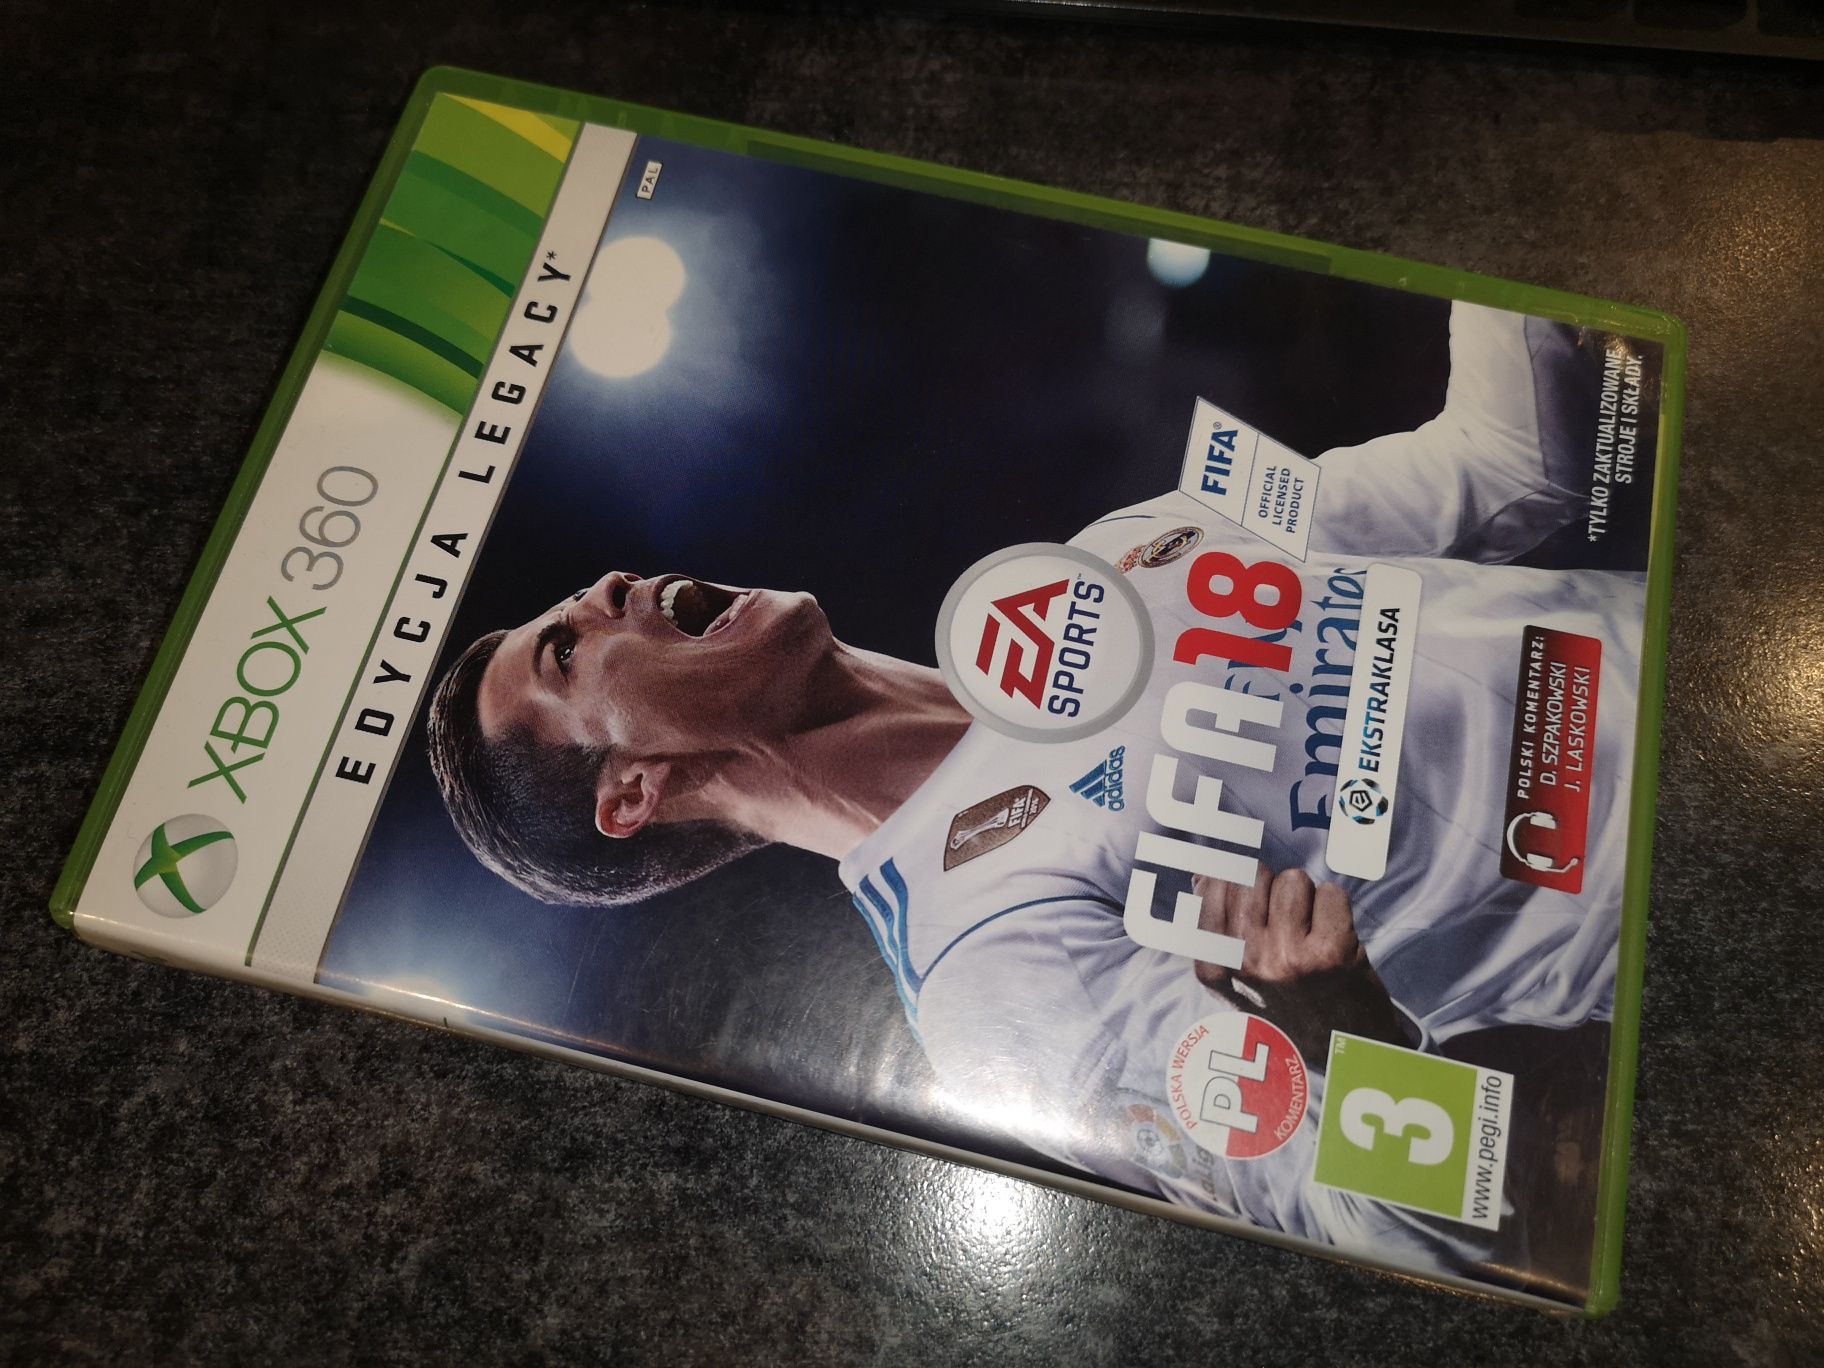 FIFA 18 XBOX 360 gra PL (stan BDB) kioskzgrami Ursus